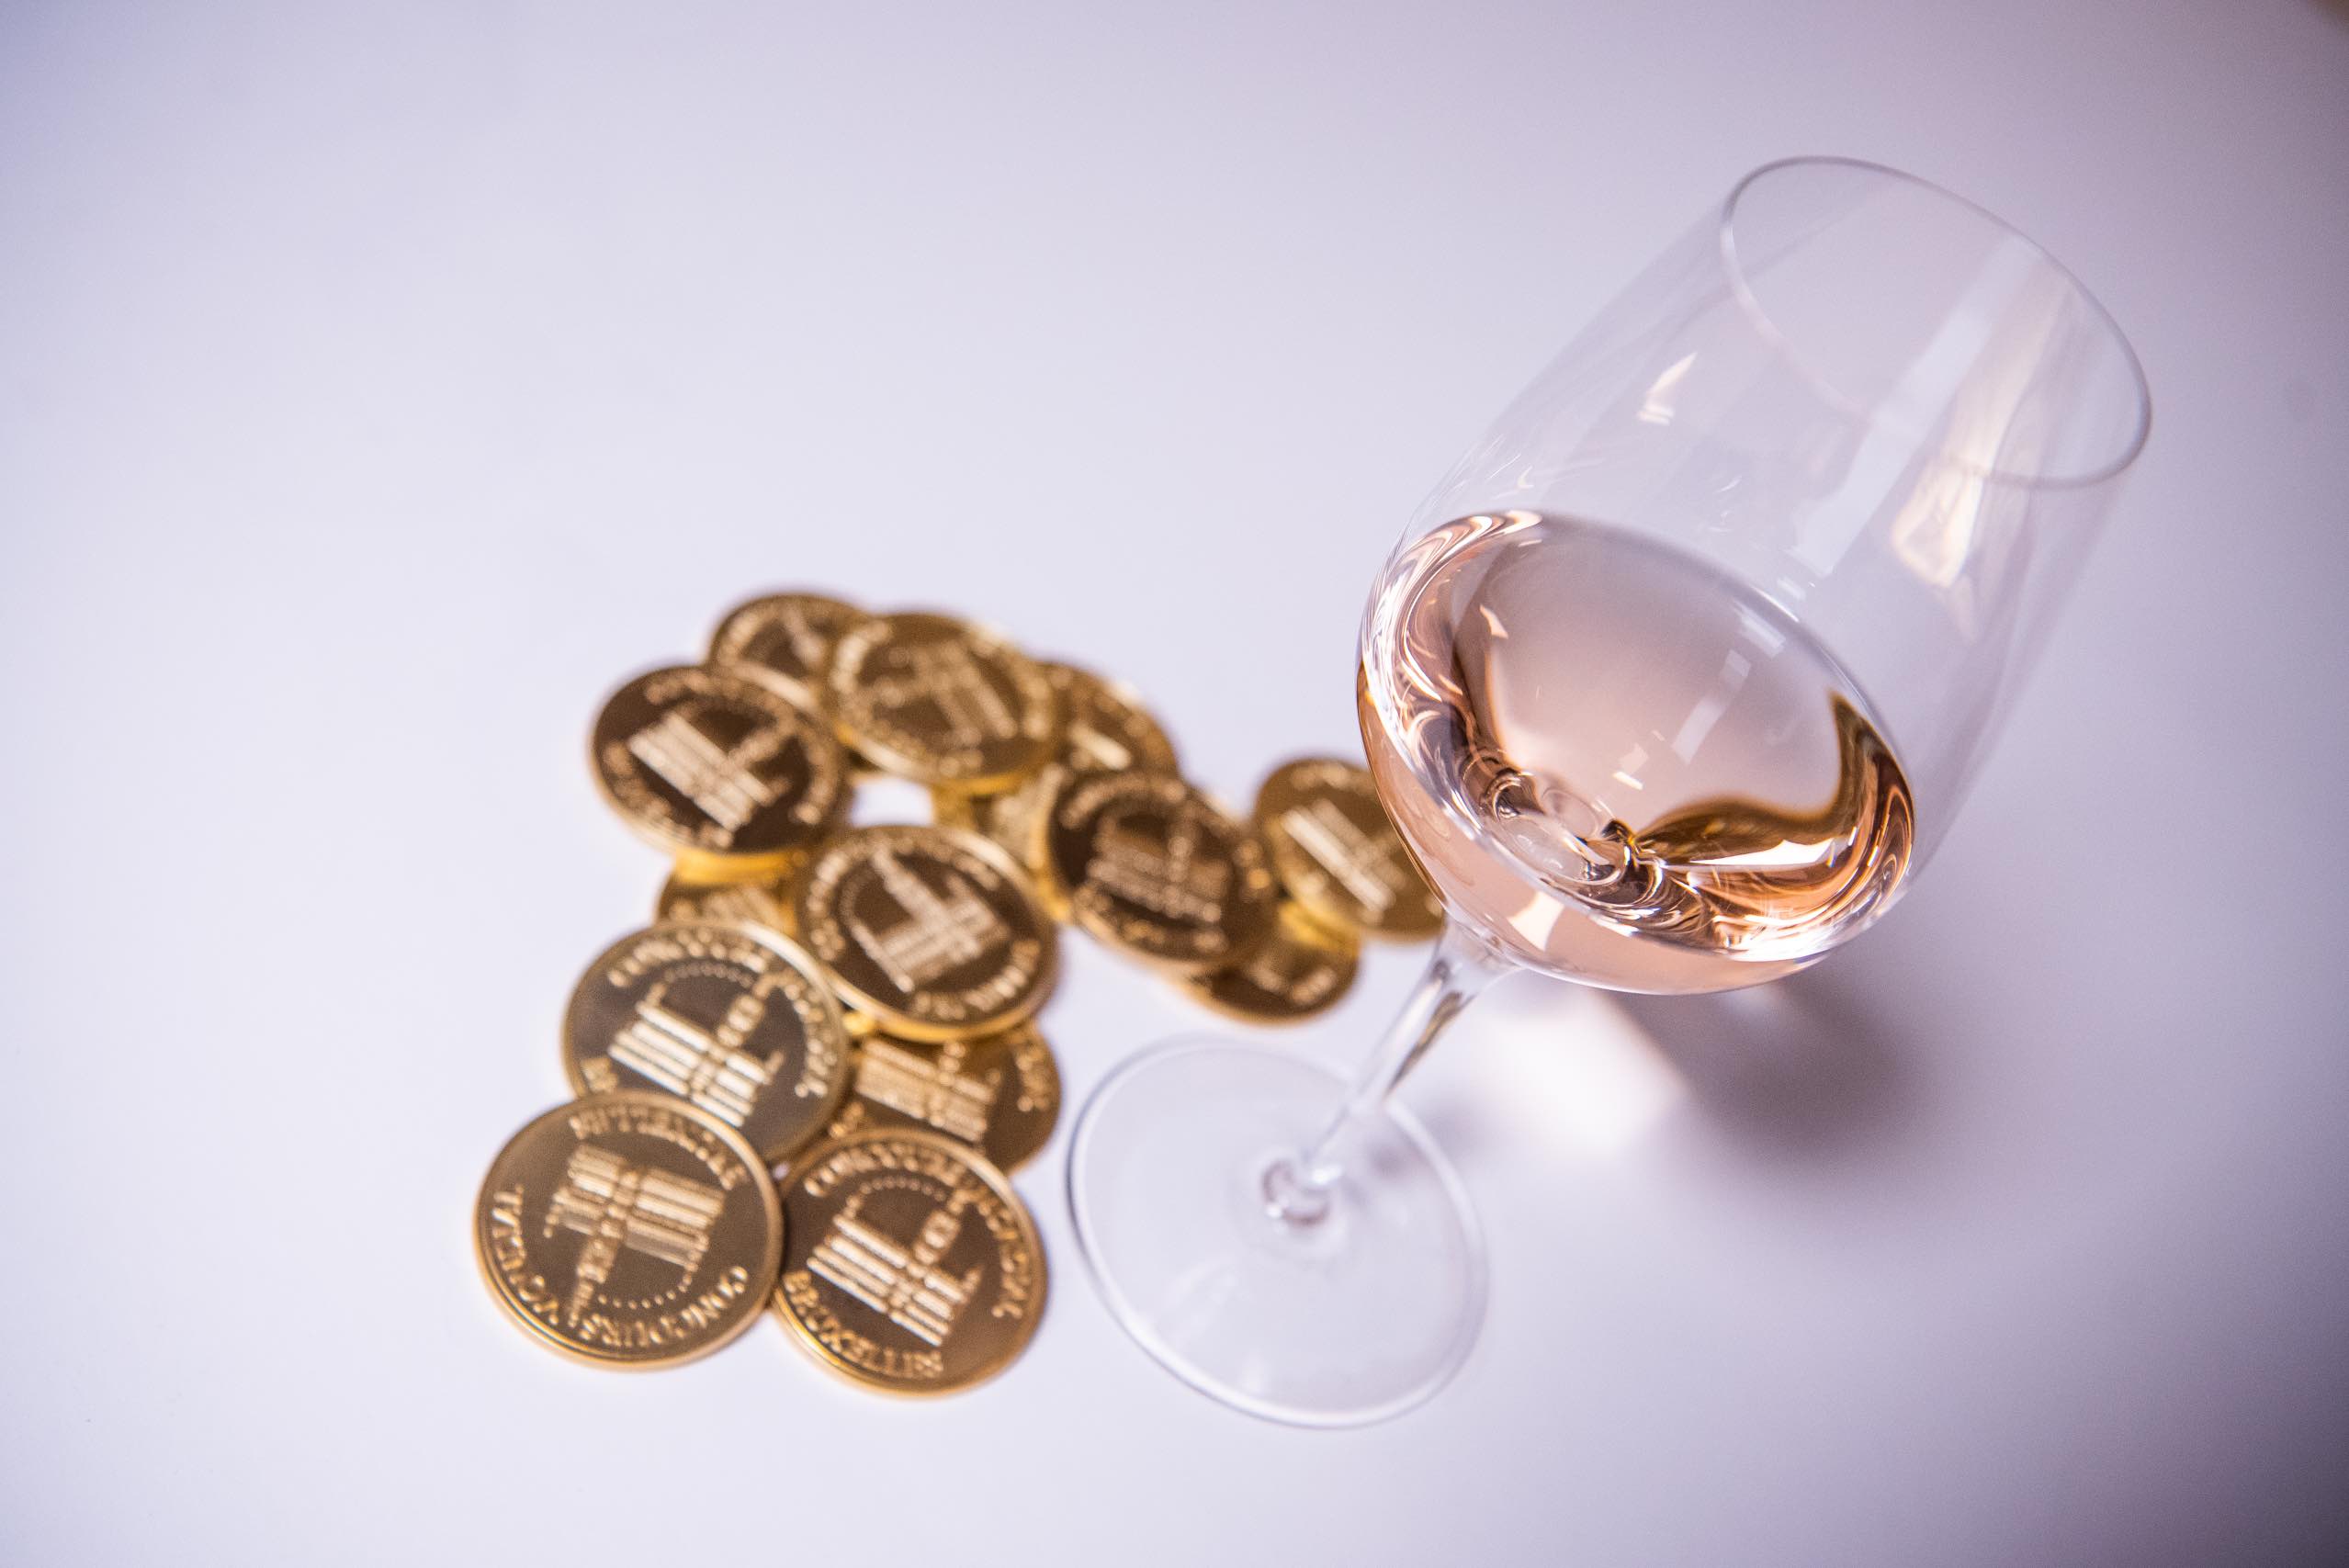 The Concours Mondial de Bruxelles reveals the best rosé wines of the year